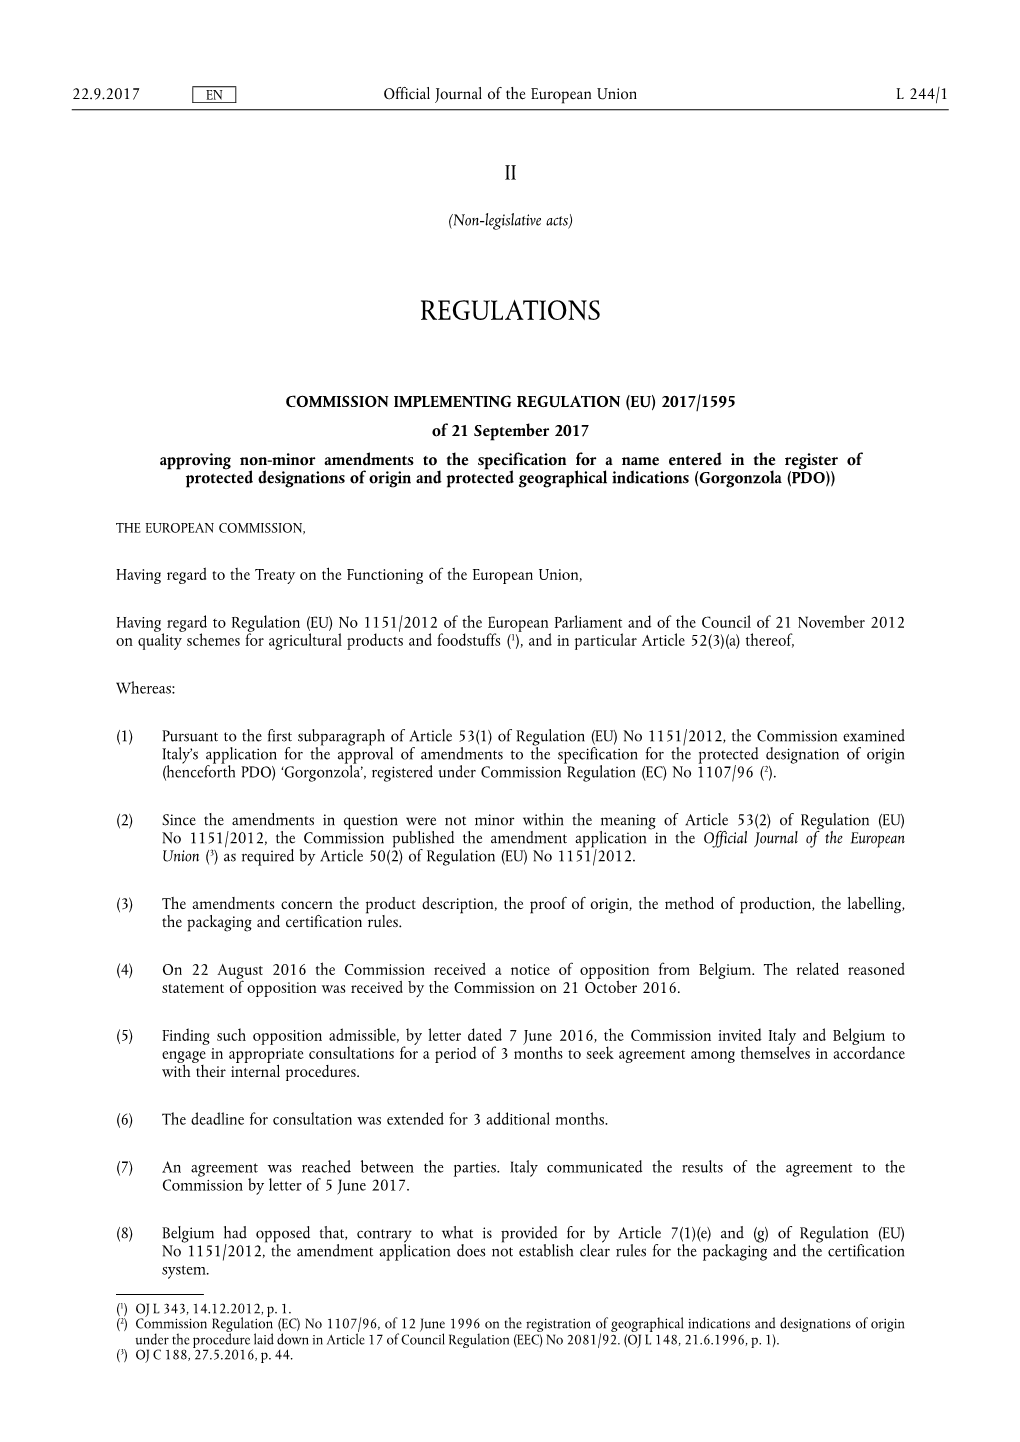 Commission Implementing Regulation (Eu) 2017/ 1595